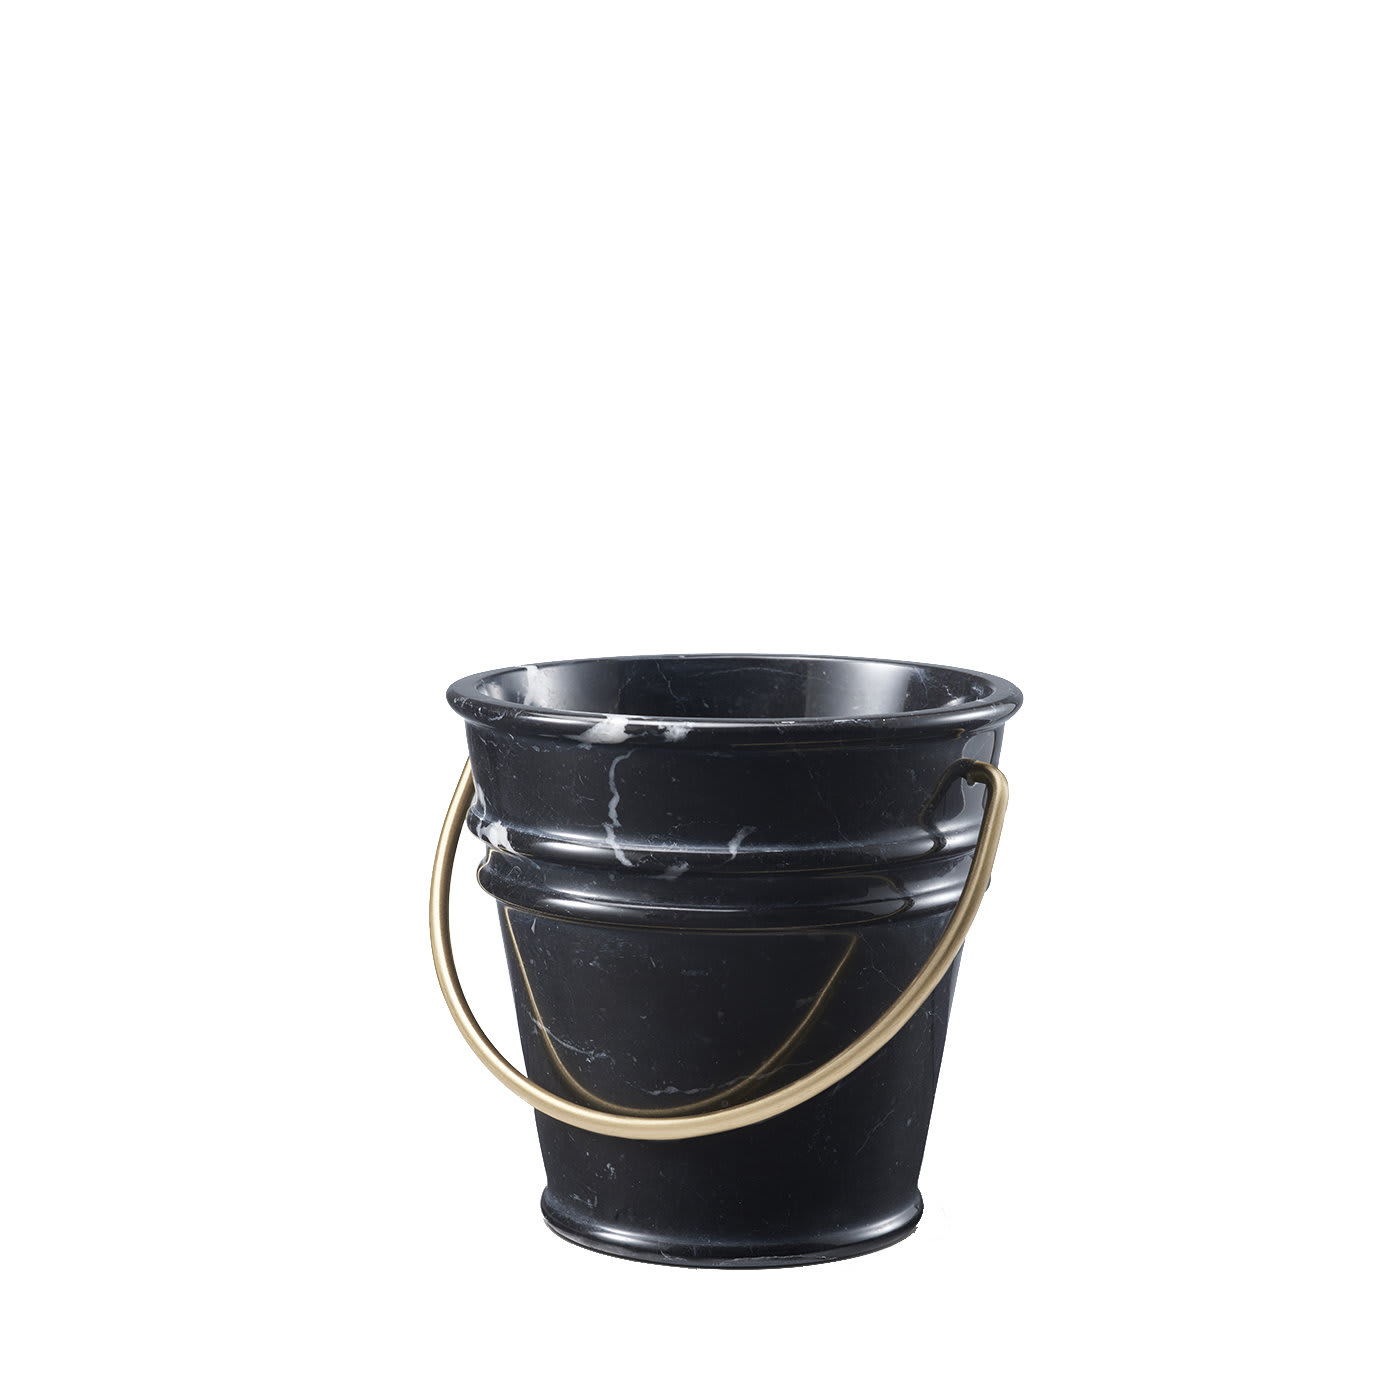 Ice Ice Baby Black Bucket by Lorenza Bozzoli - Editions Milano